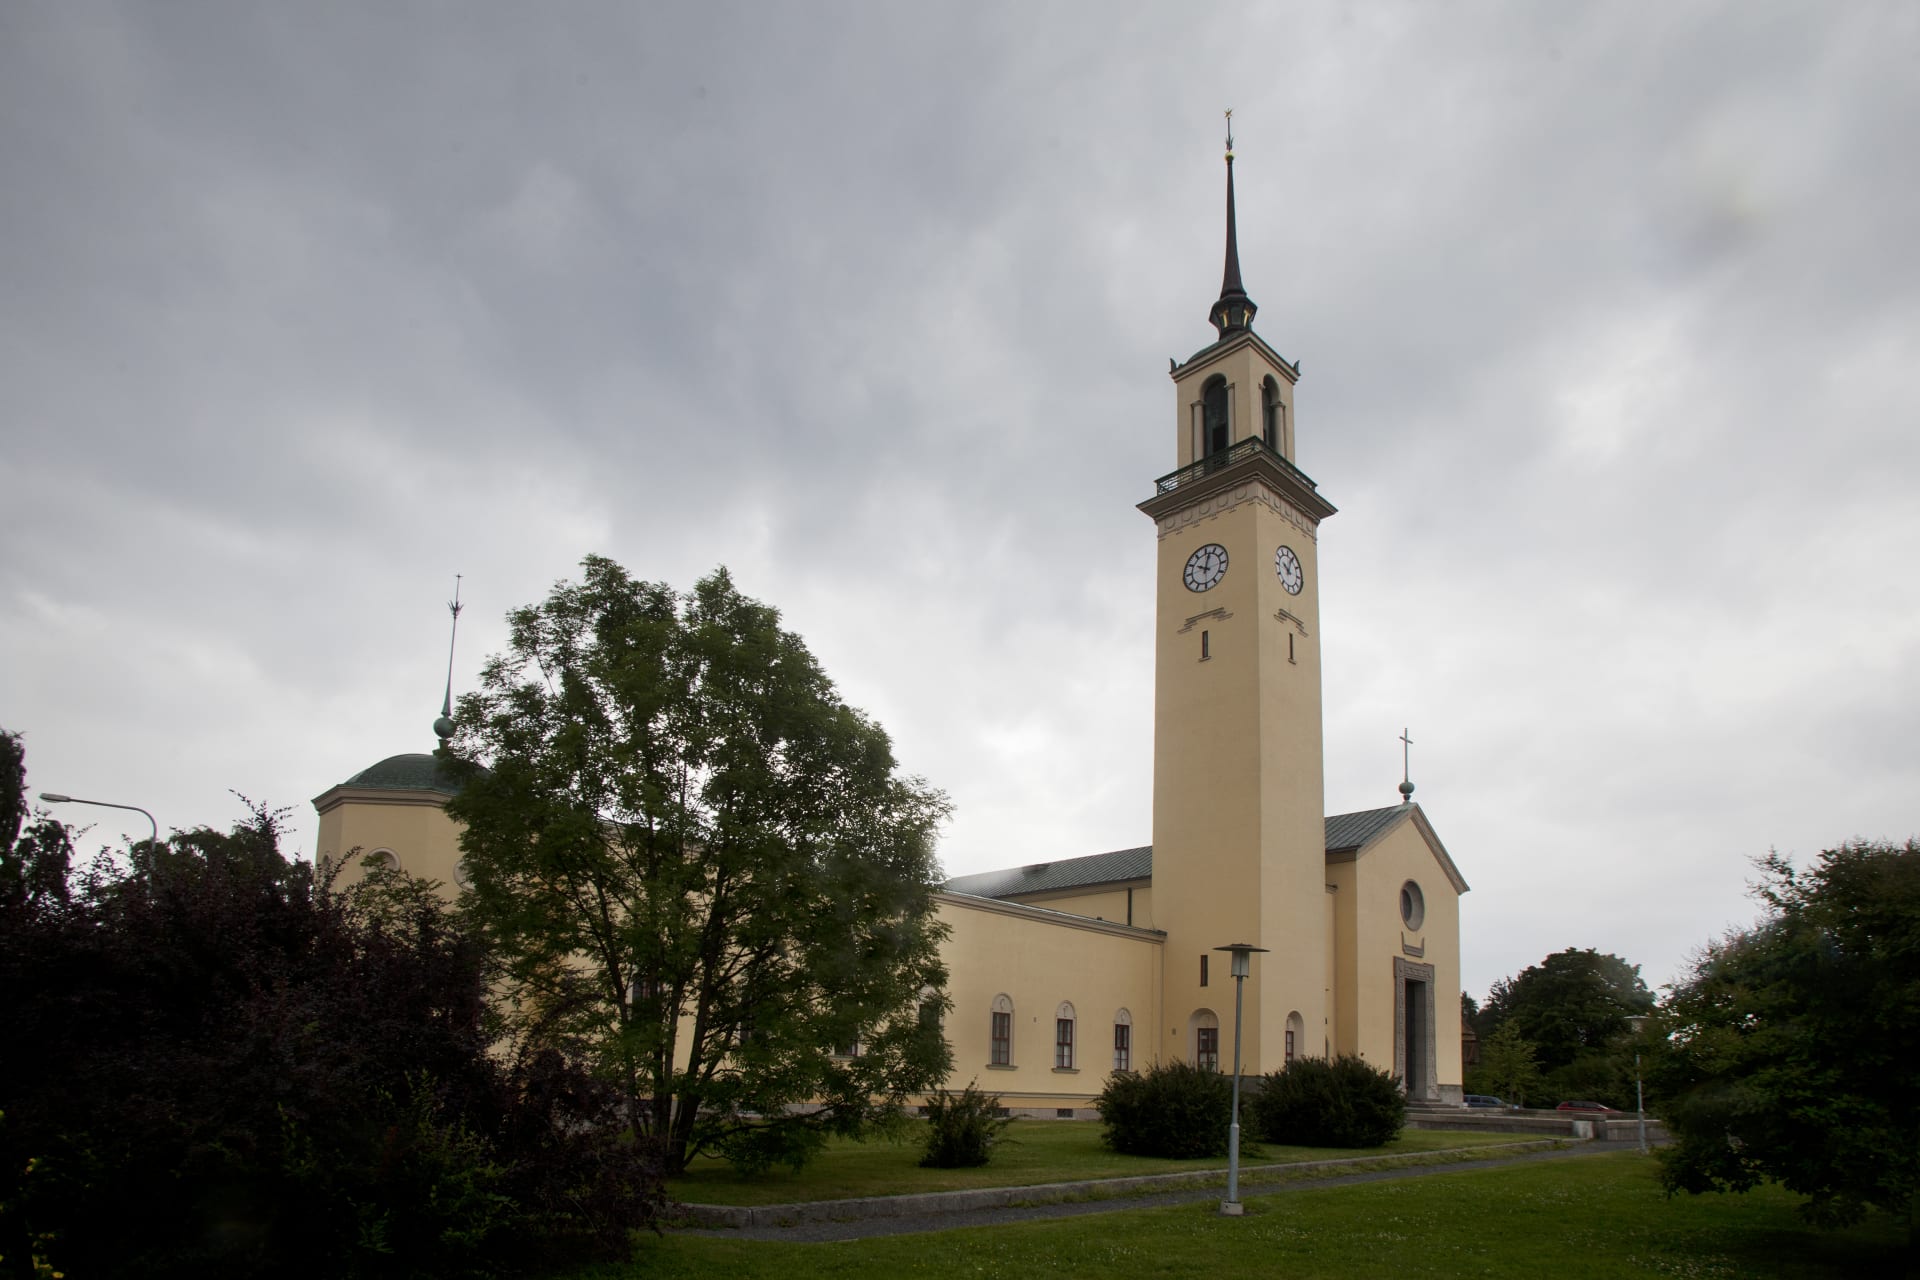 Viinikka Church on a cloudy summer day